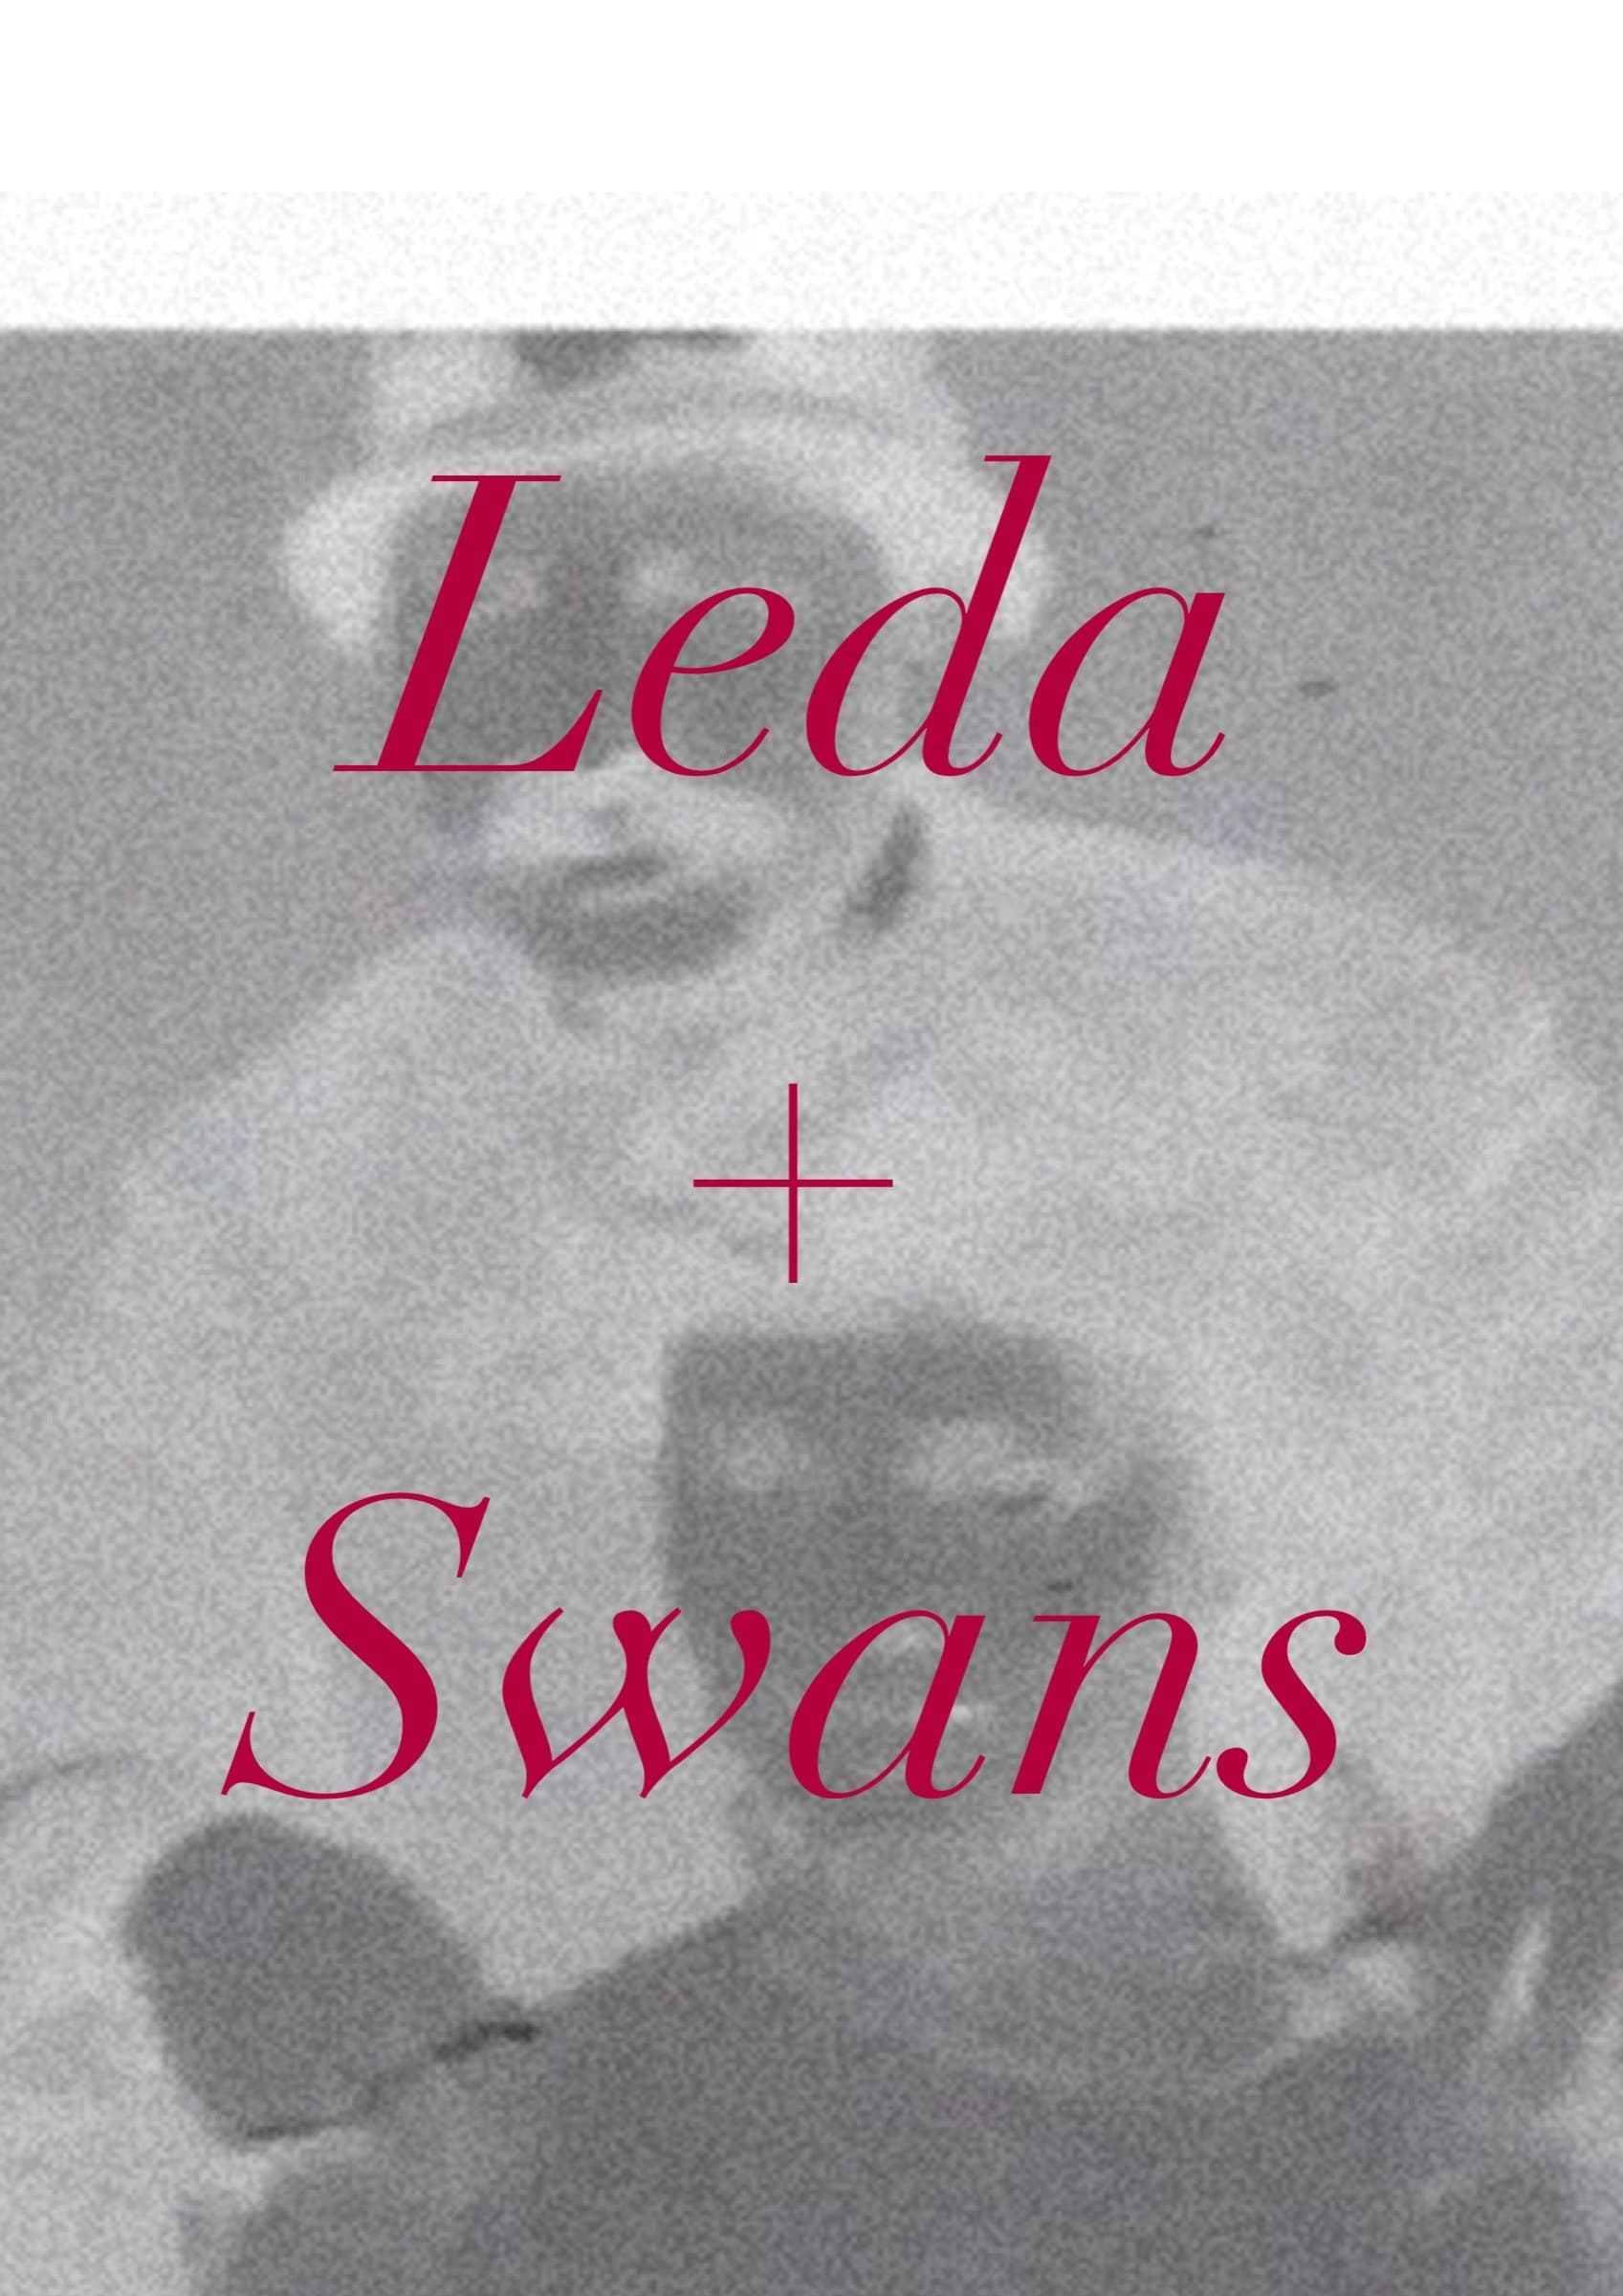 Leda + Swans